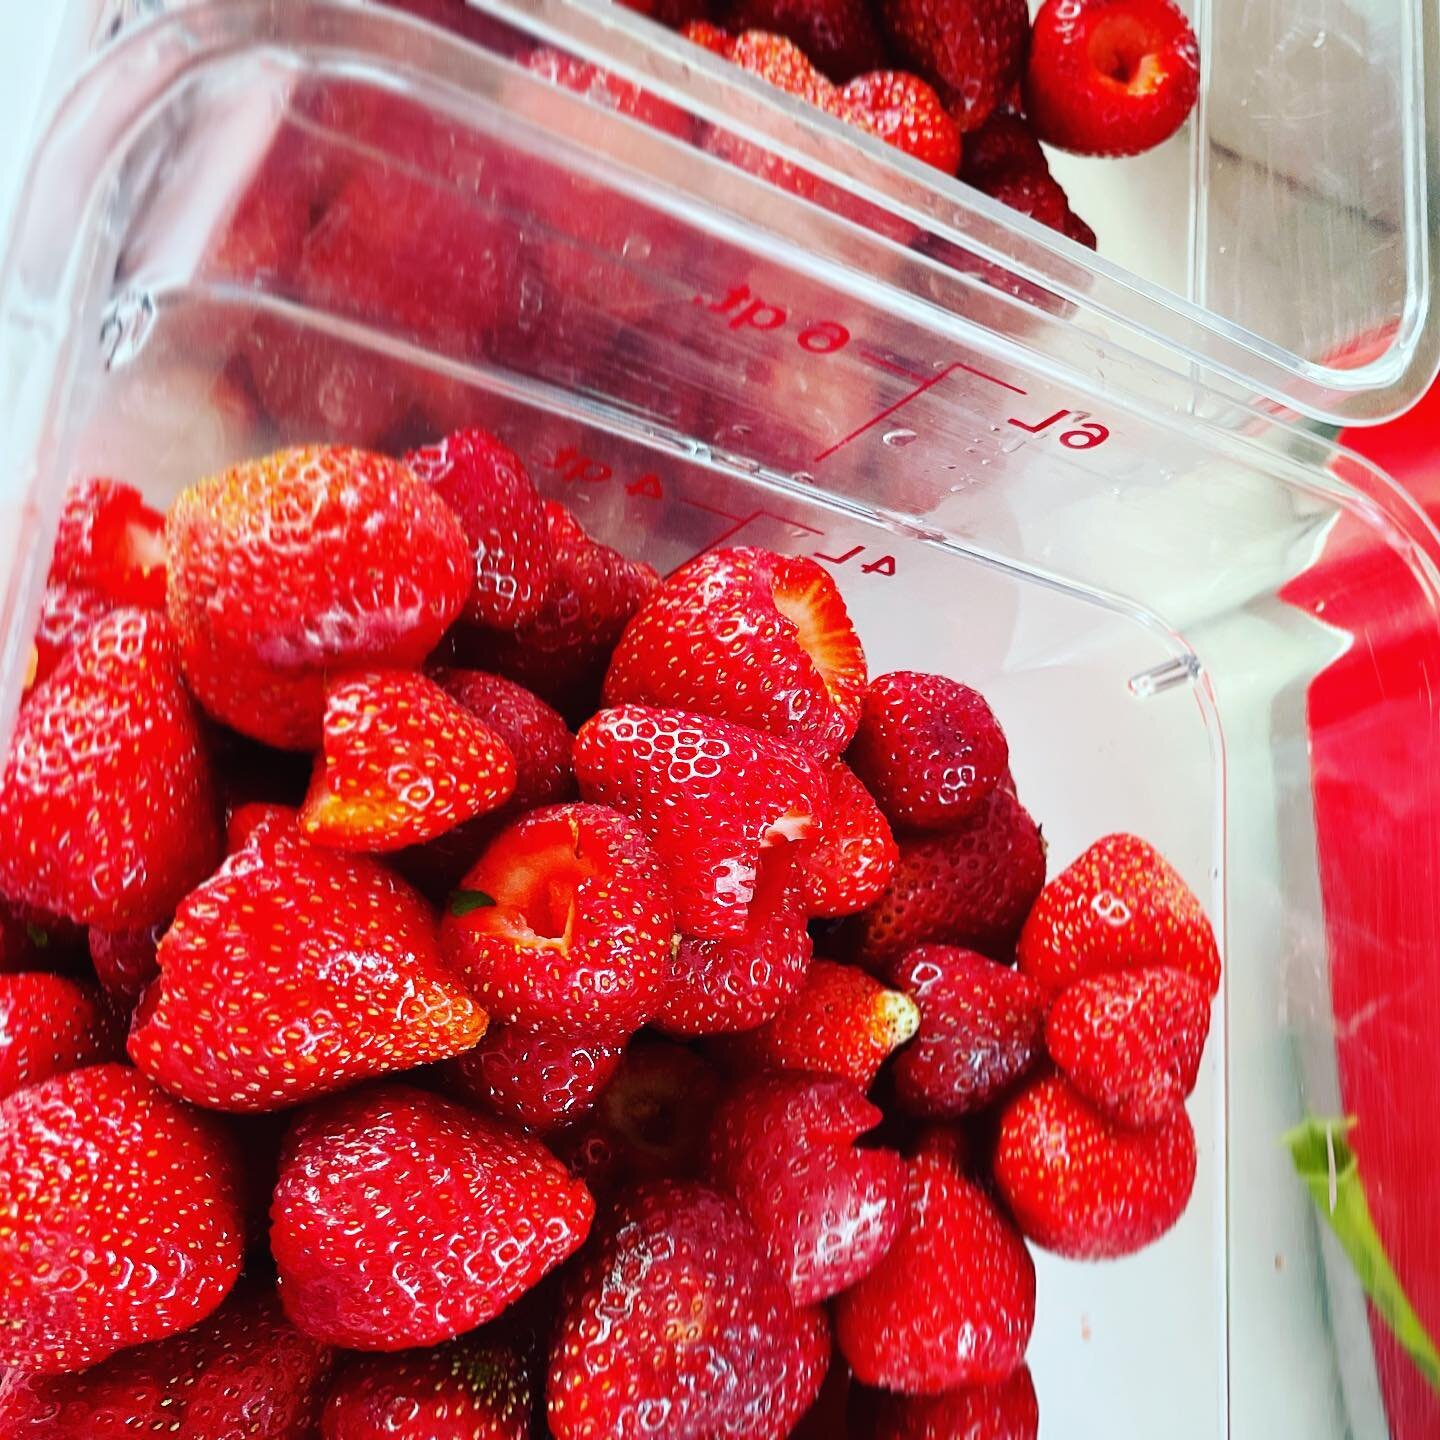 Have a Berry Good Day! 🍓 ❤️ #outrageous #sweet #strawberries #heightoftheseason #sealevelfarm @dansmarket #yum #alamedafruitco #organic #jam #madeinalameda #loveourisland #kitchenprep #eastbayeats #edibleart